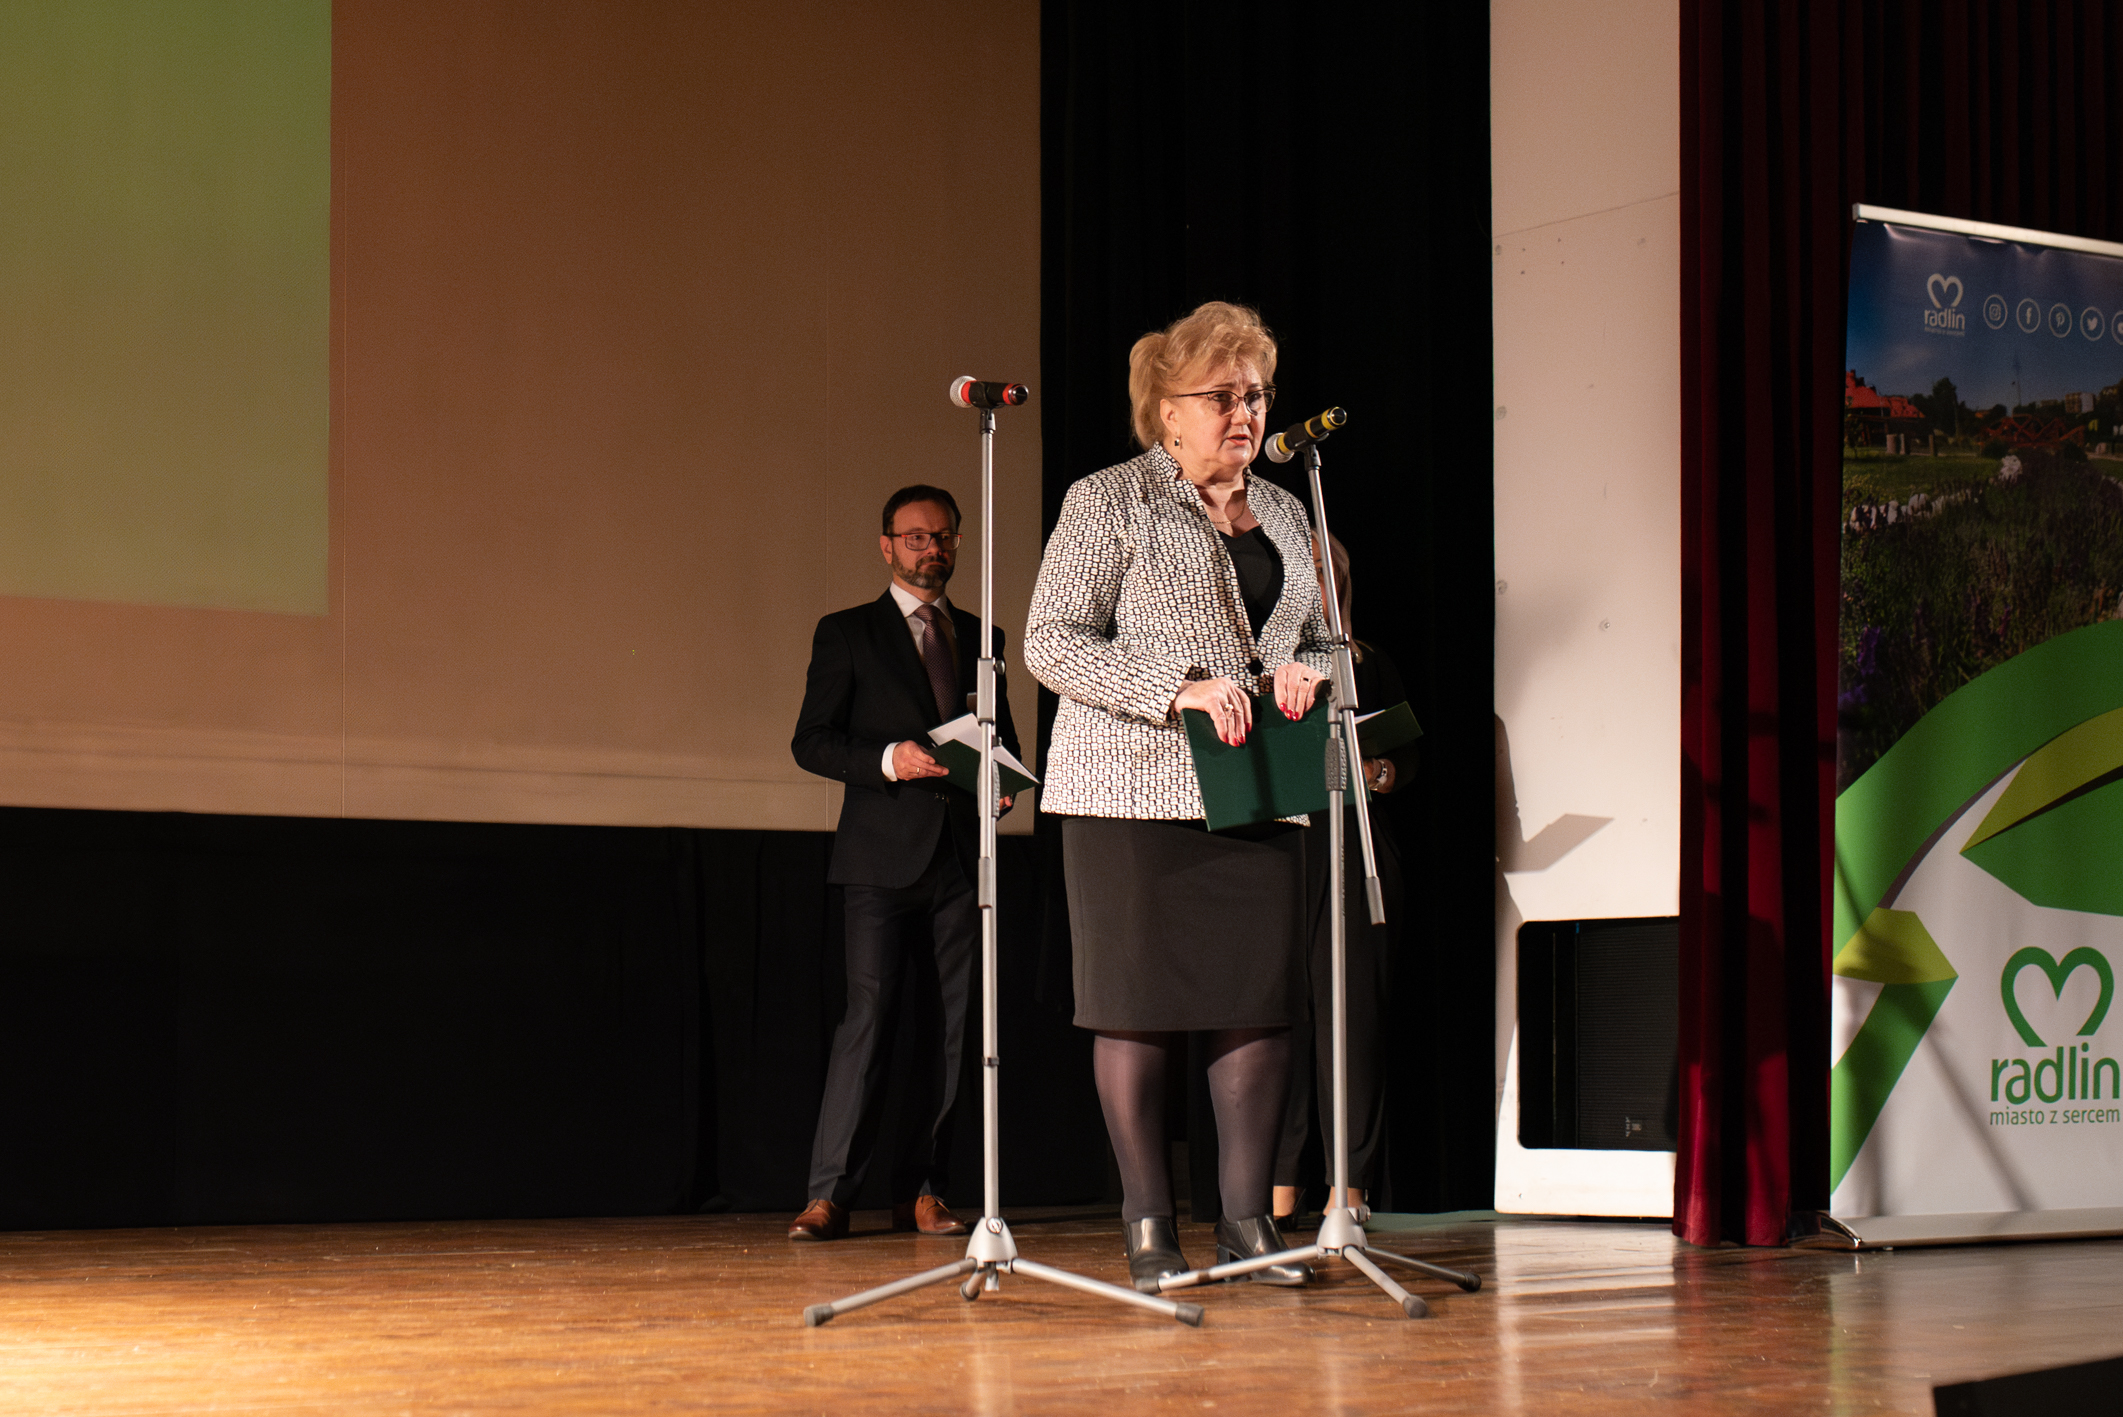 Burmistrz Radlina, Barbara Magiera